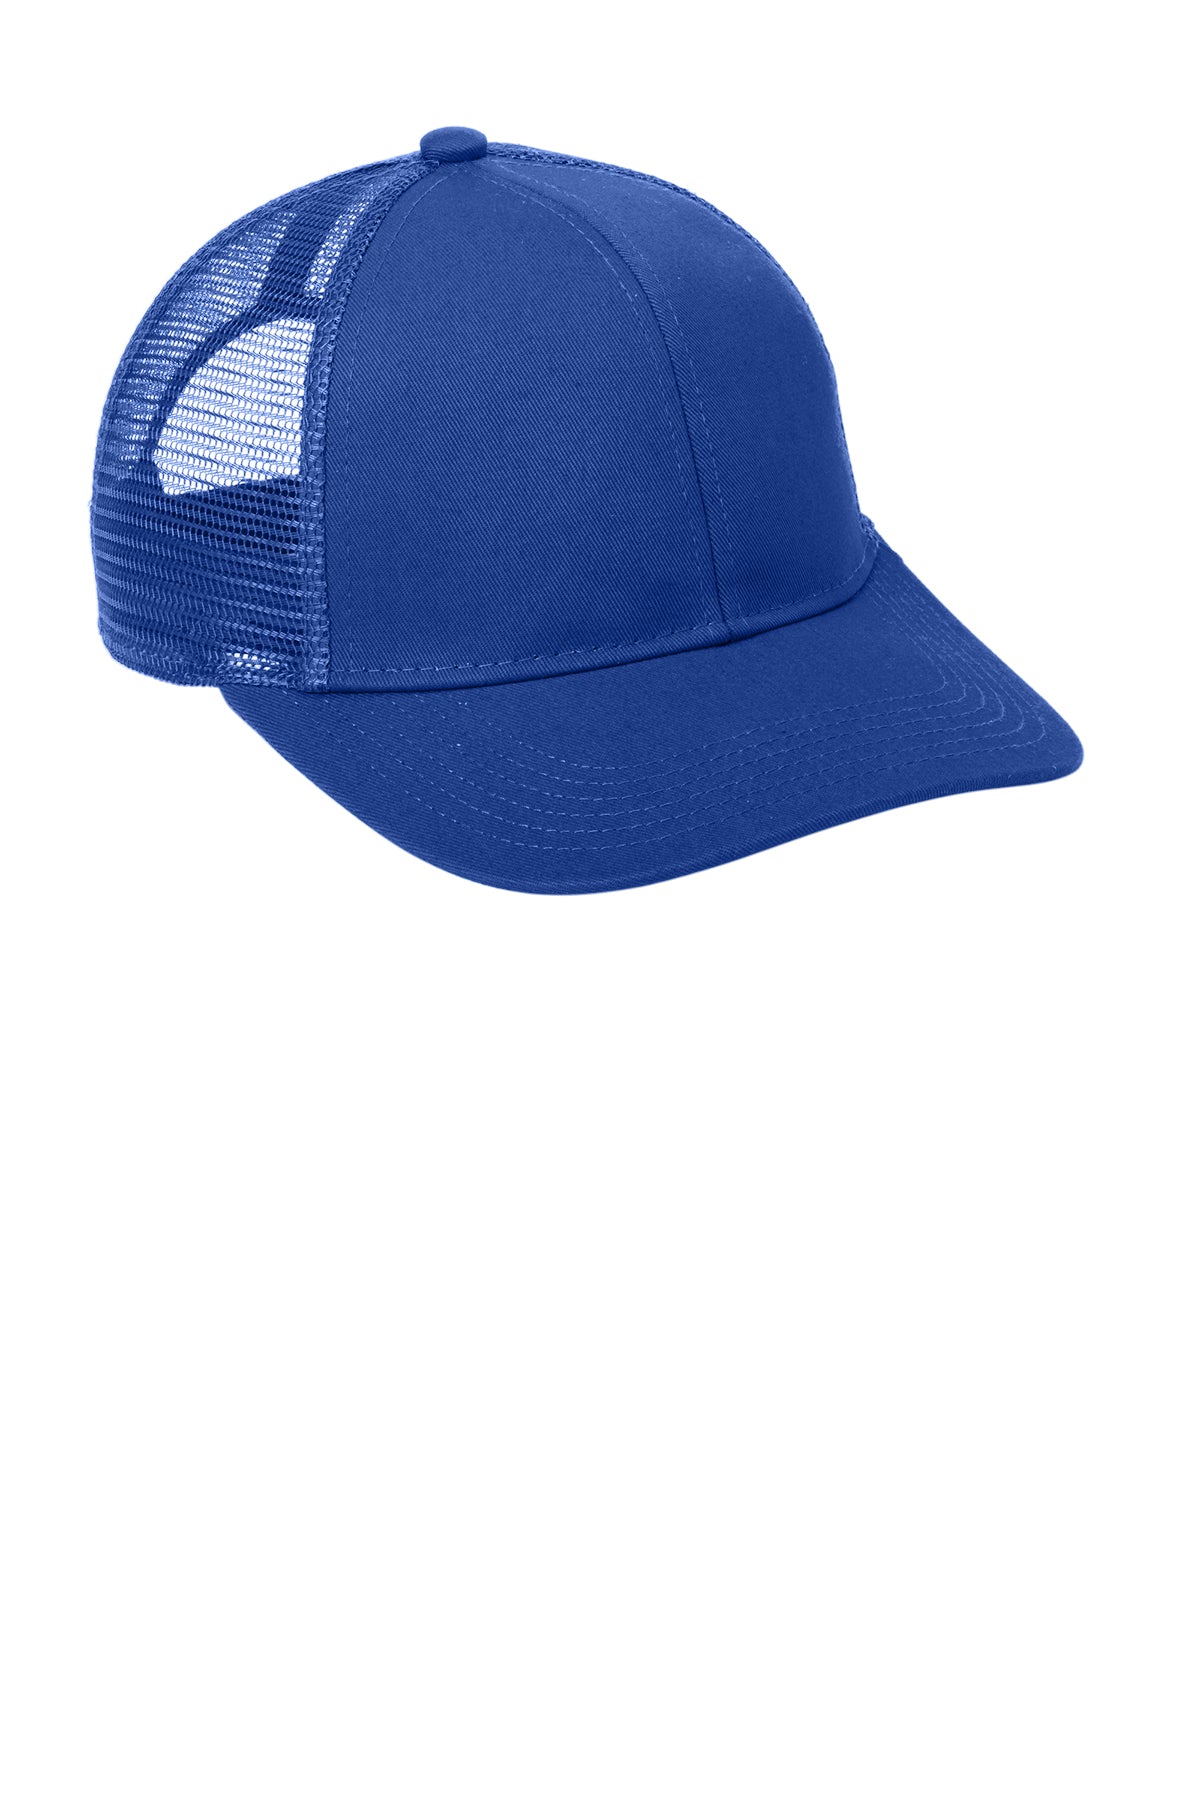 Port Authority Adjustable Mesh Back Branded Caps, Radiant Royal